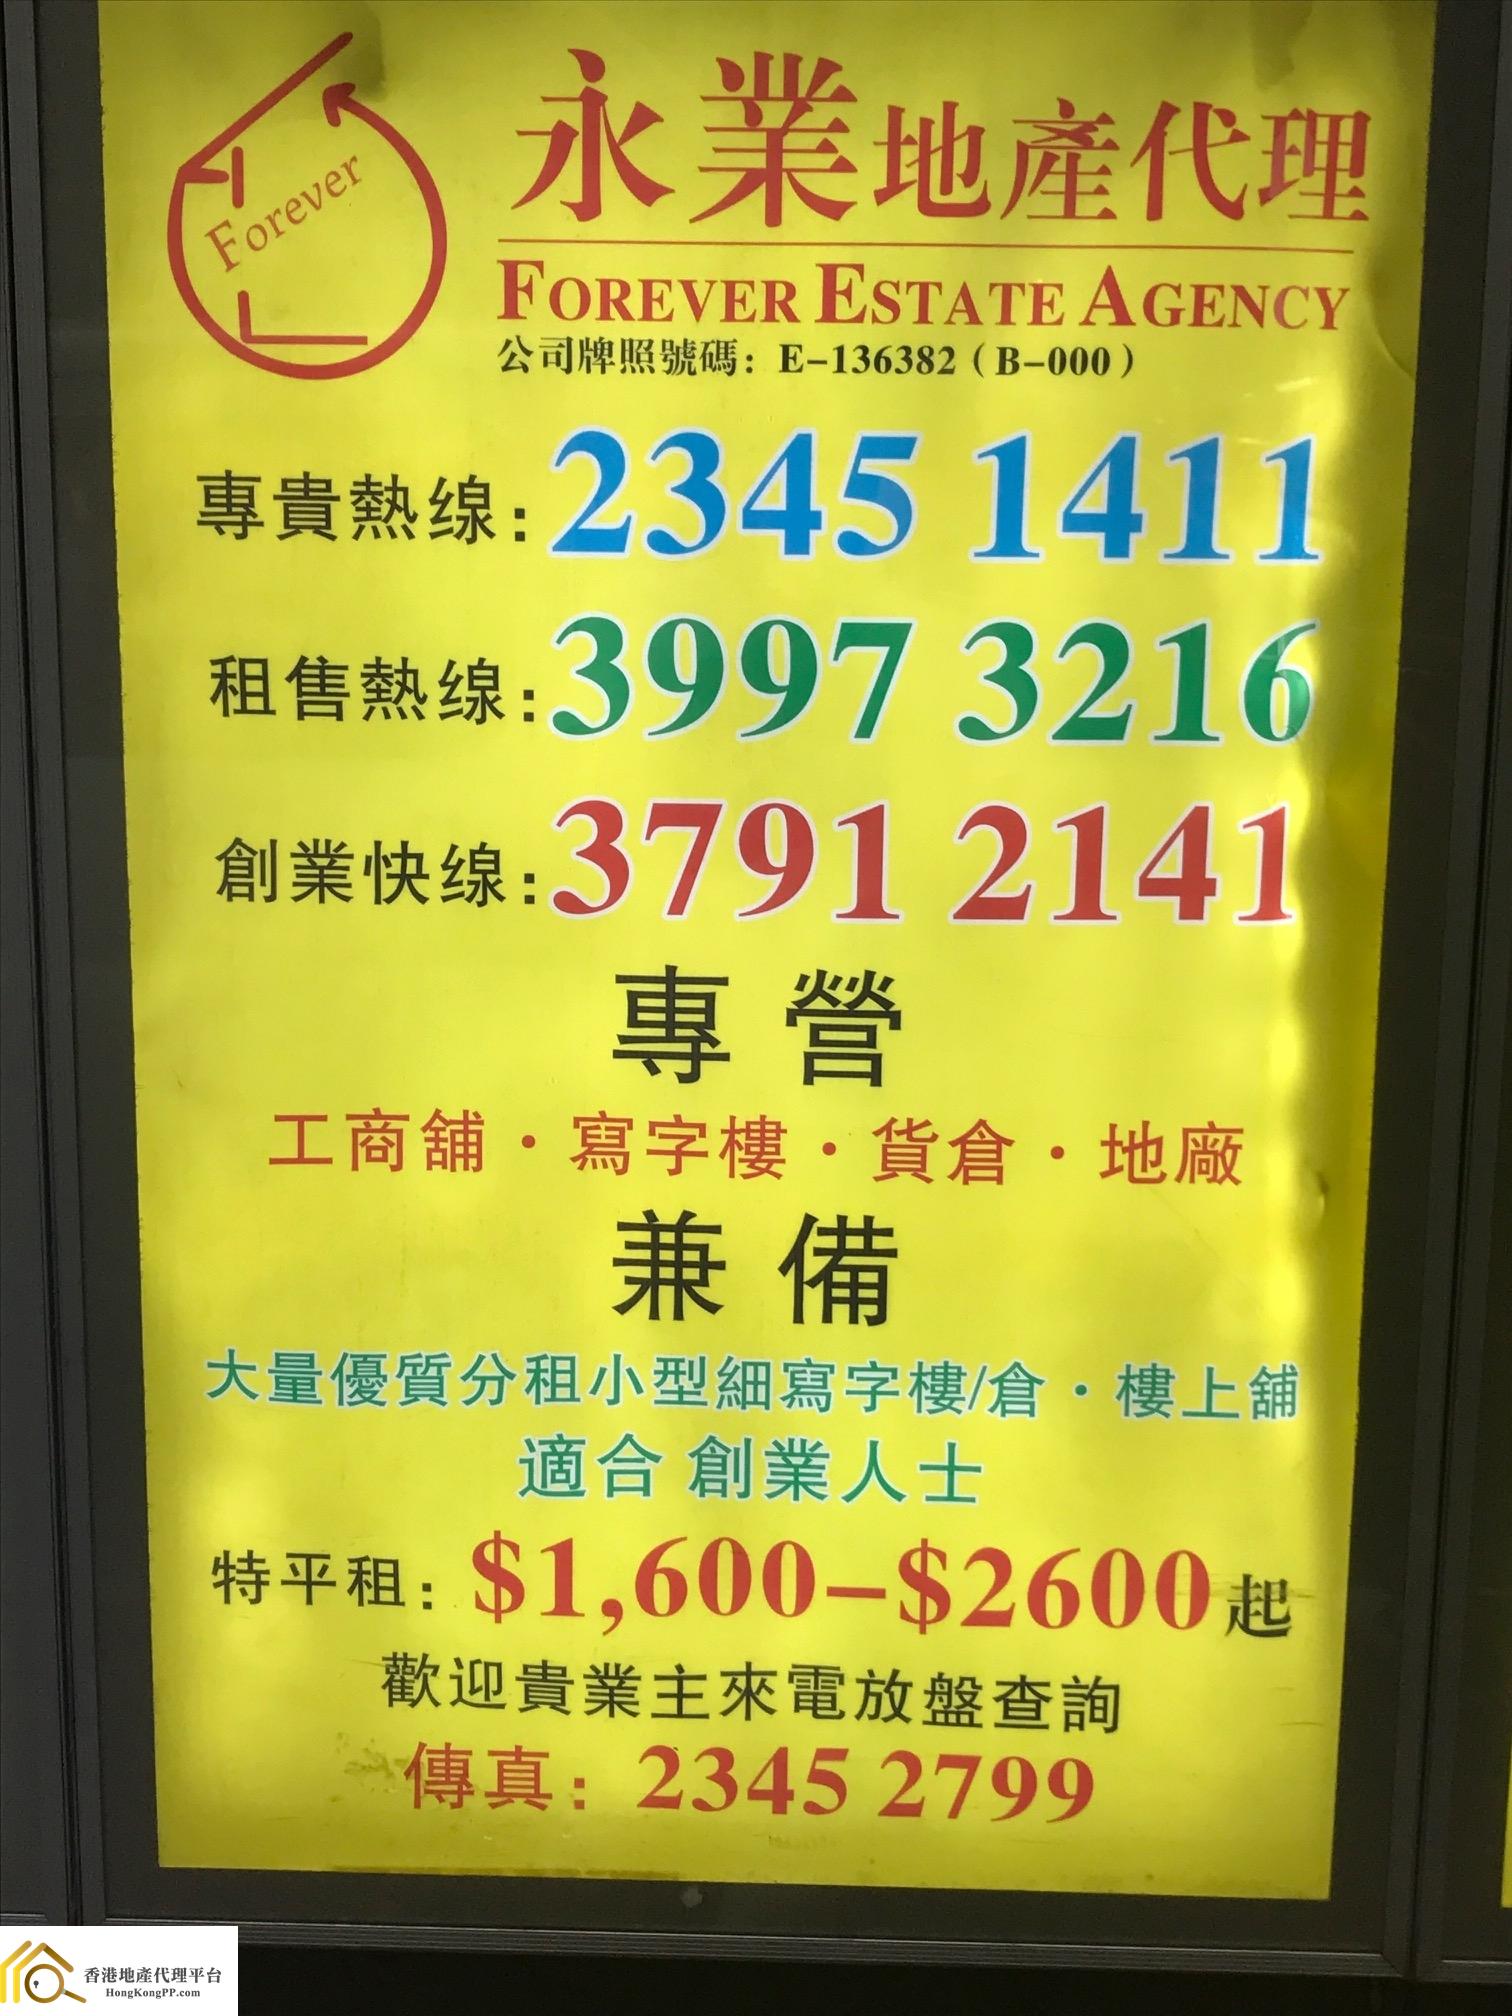 商舖地產代理: 永業地產代理 Forever Estate Agency 